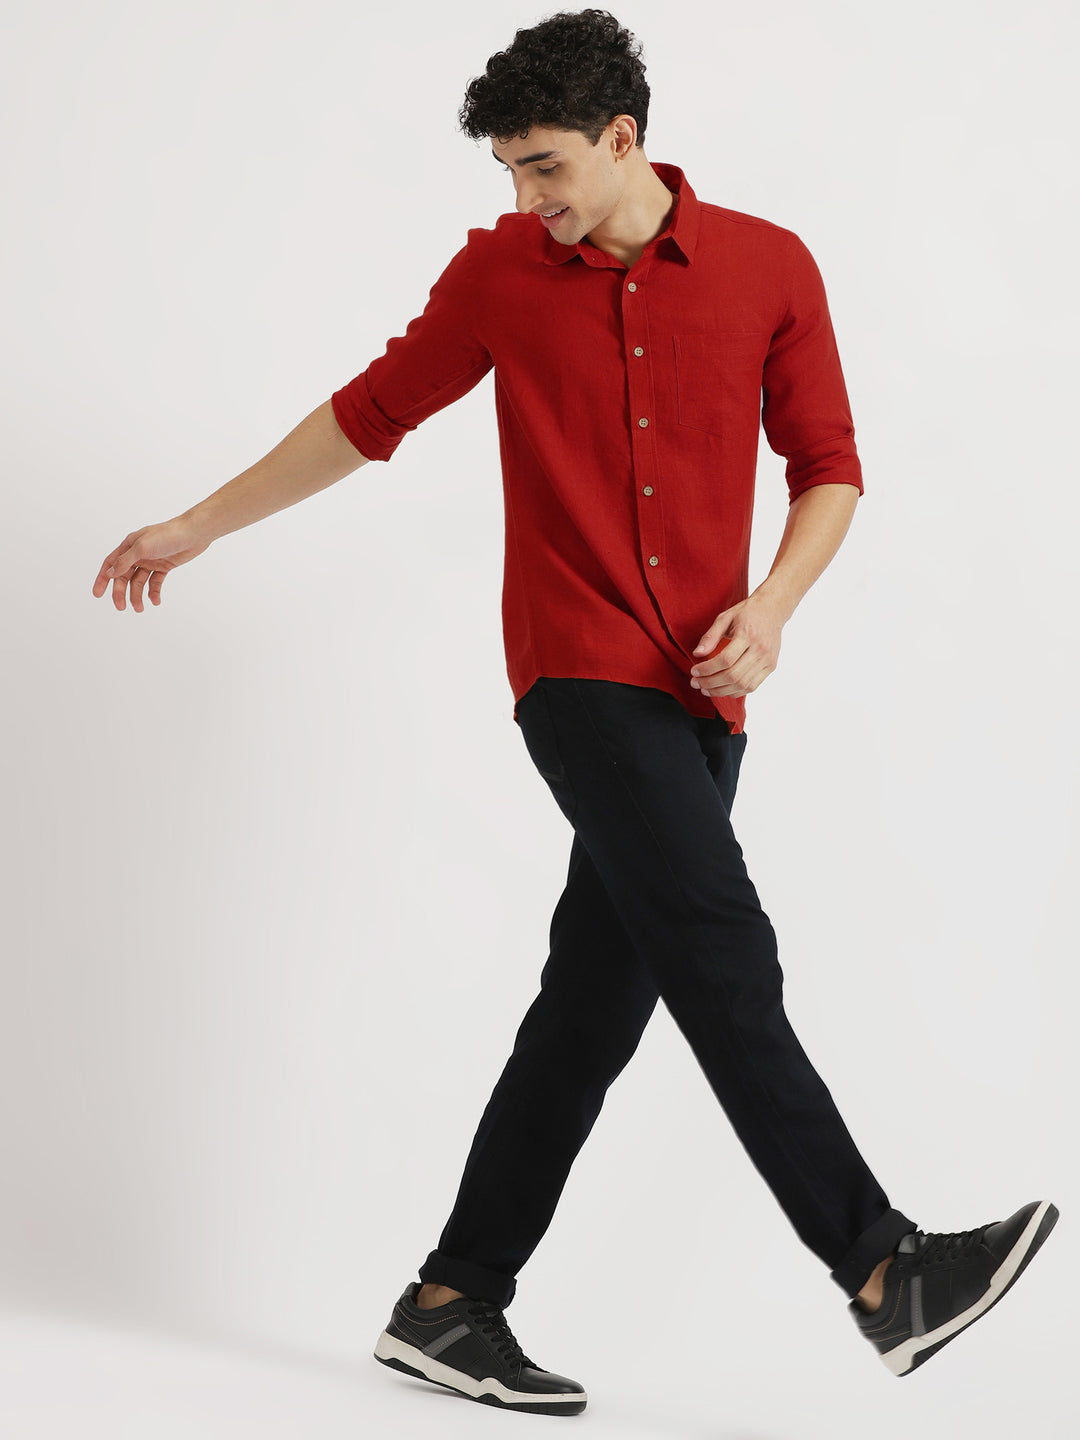 Harvey - Pure Linen Full Sleeve Shirt - Mud Red